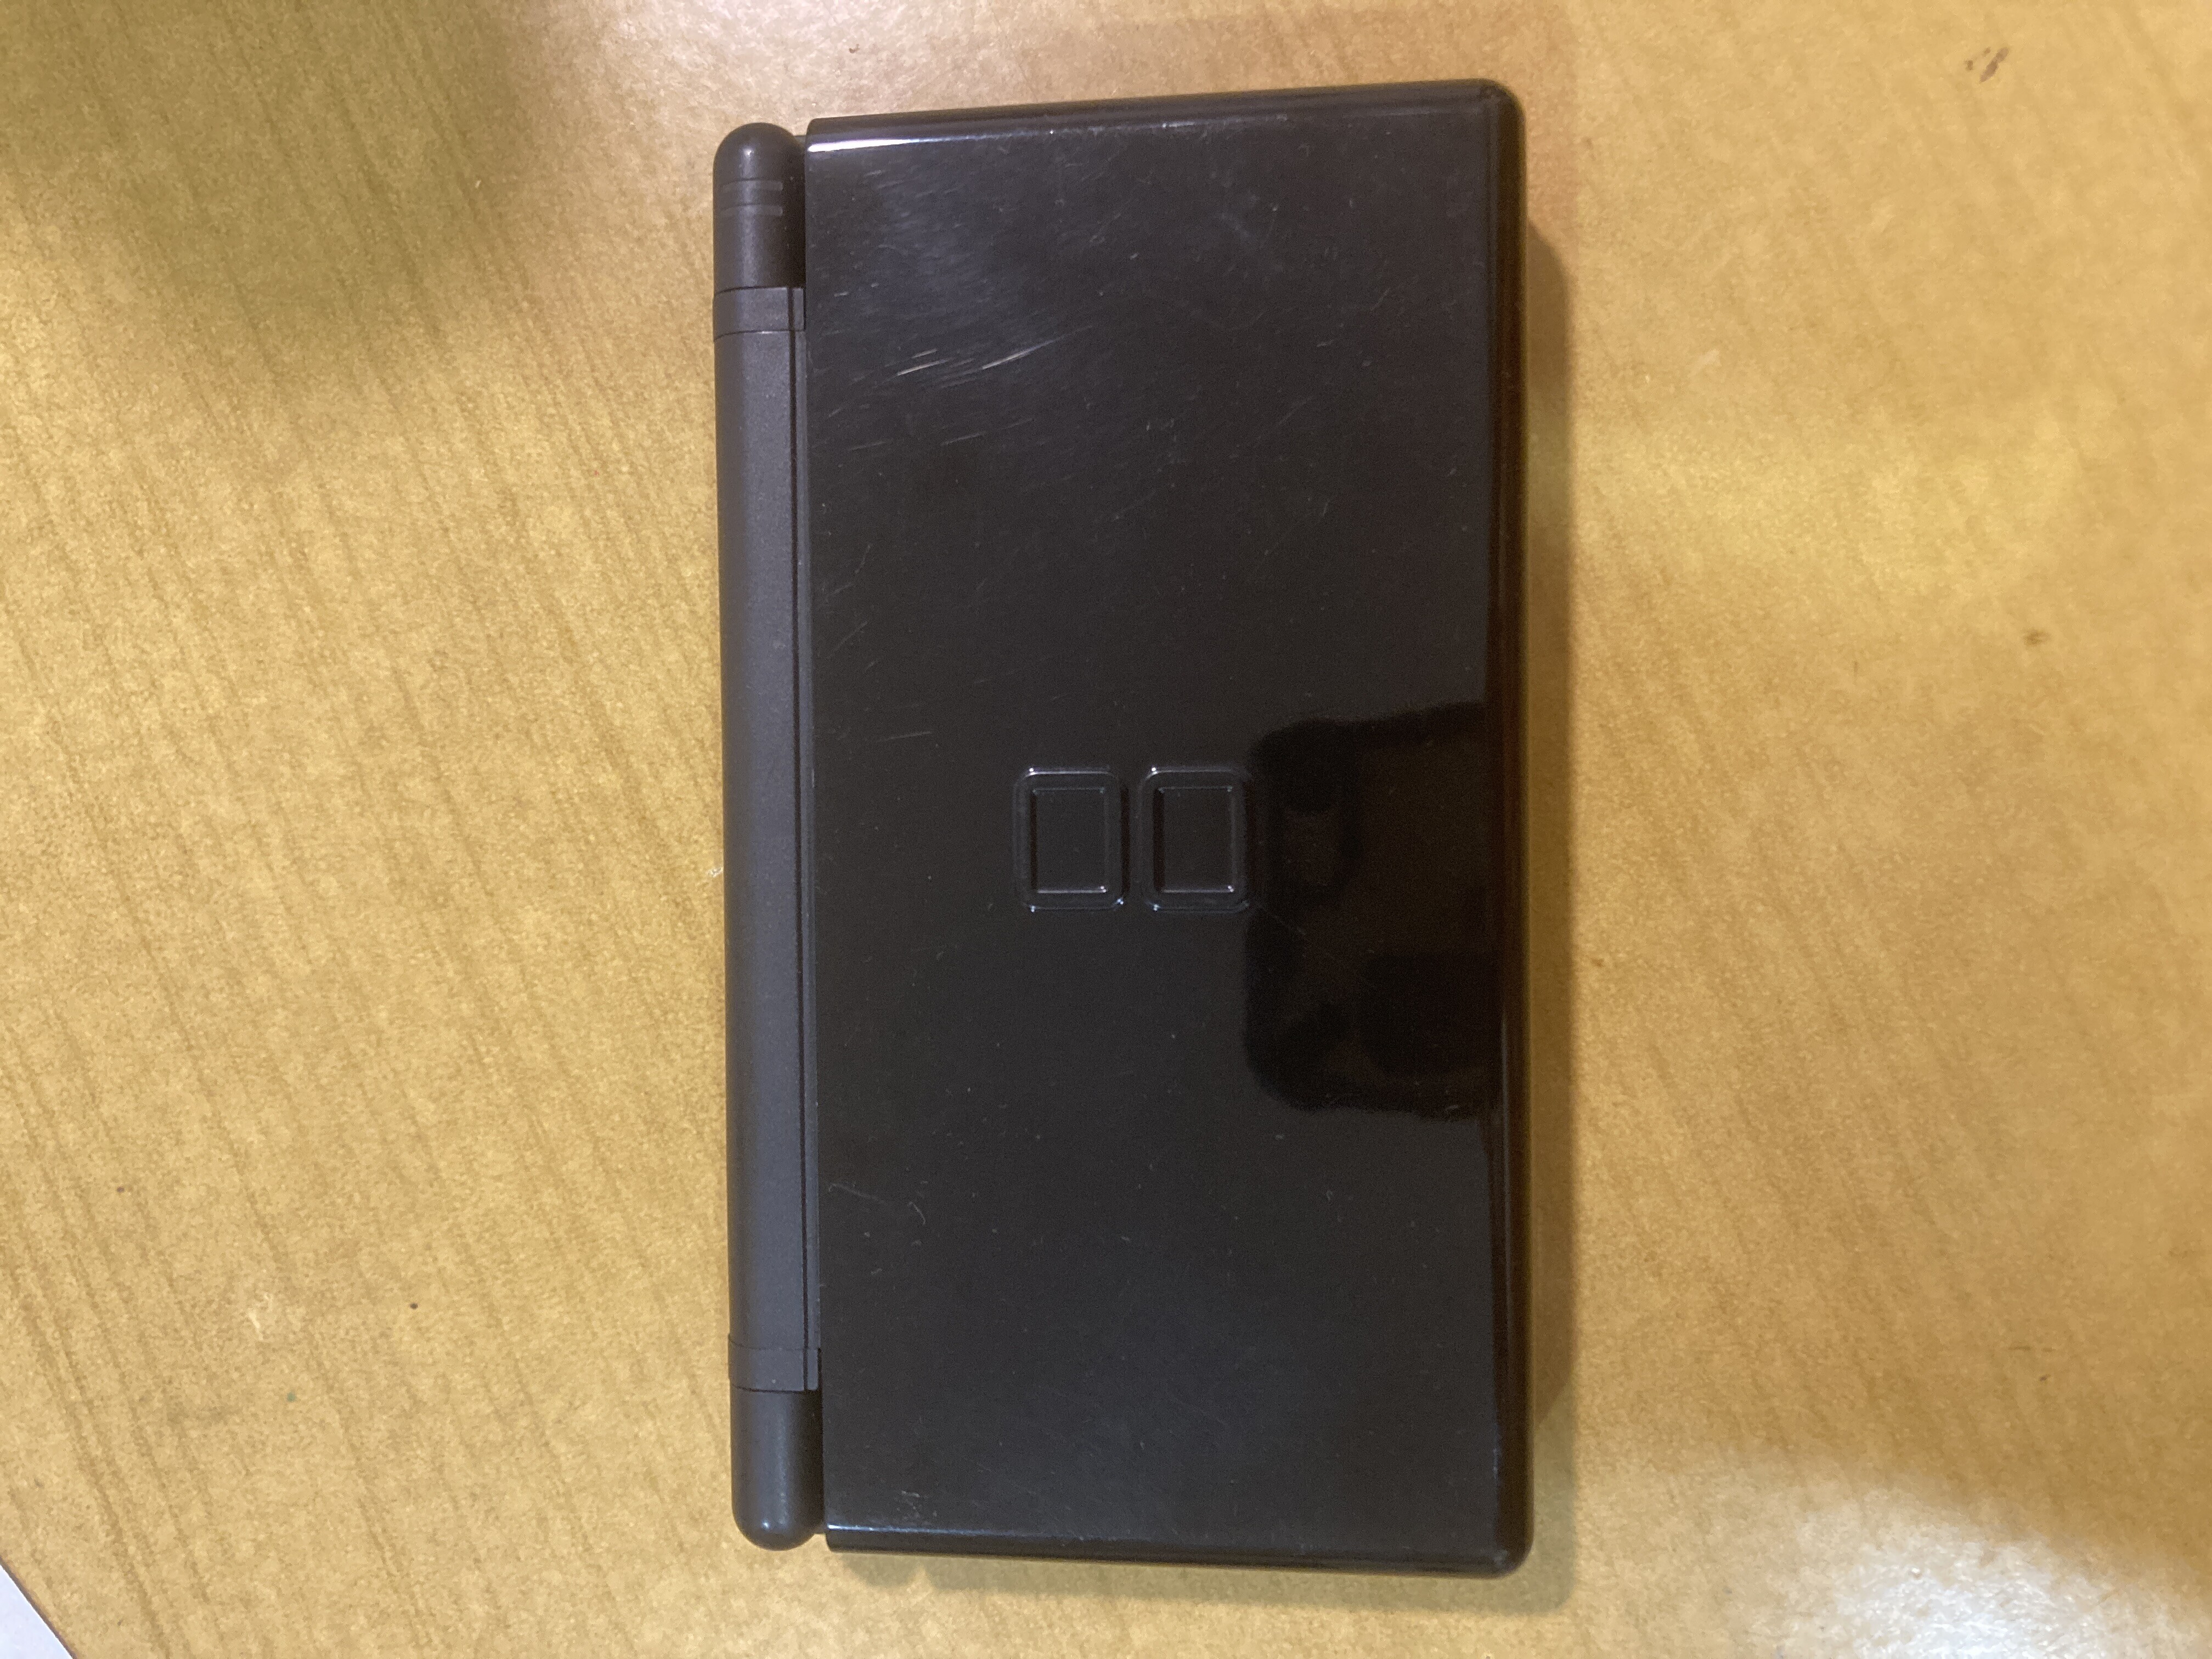  Nintendo DS Lite Onyx Black Console [ASI]